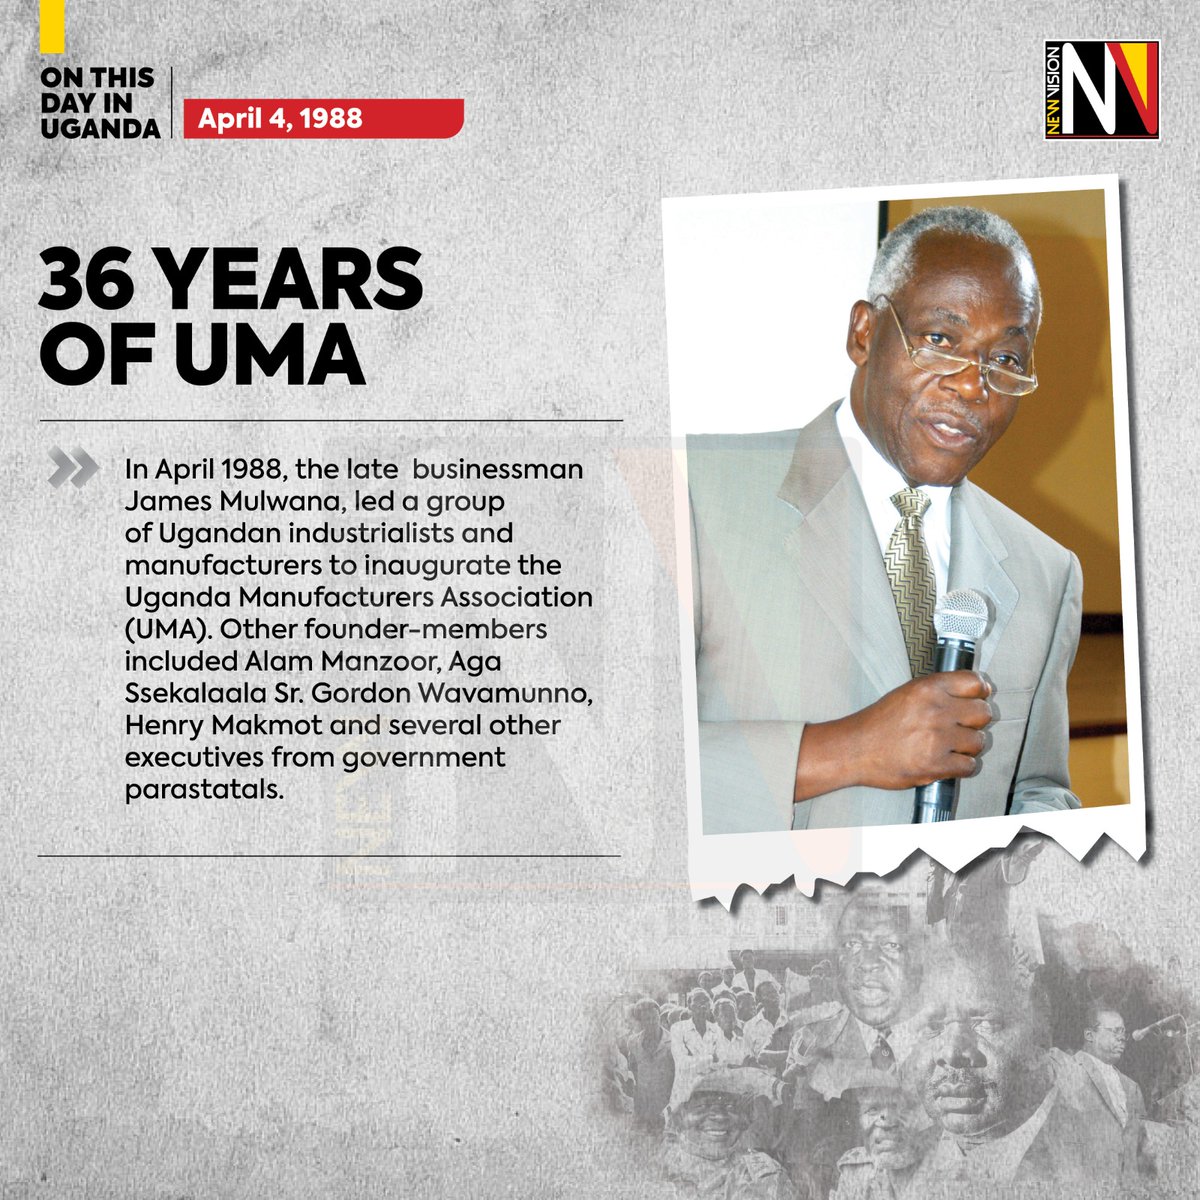 TODAY IN HISTORY 36 years of Uganda Manufactures Association (@newsUMA) #VisionUpdates